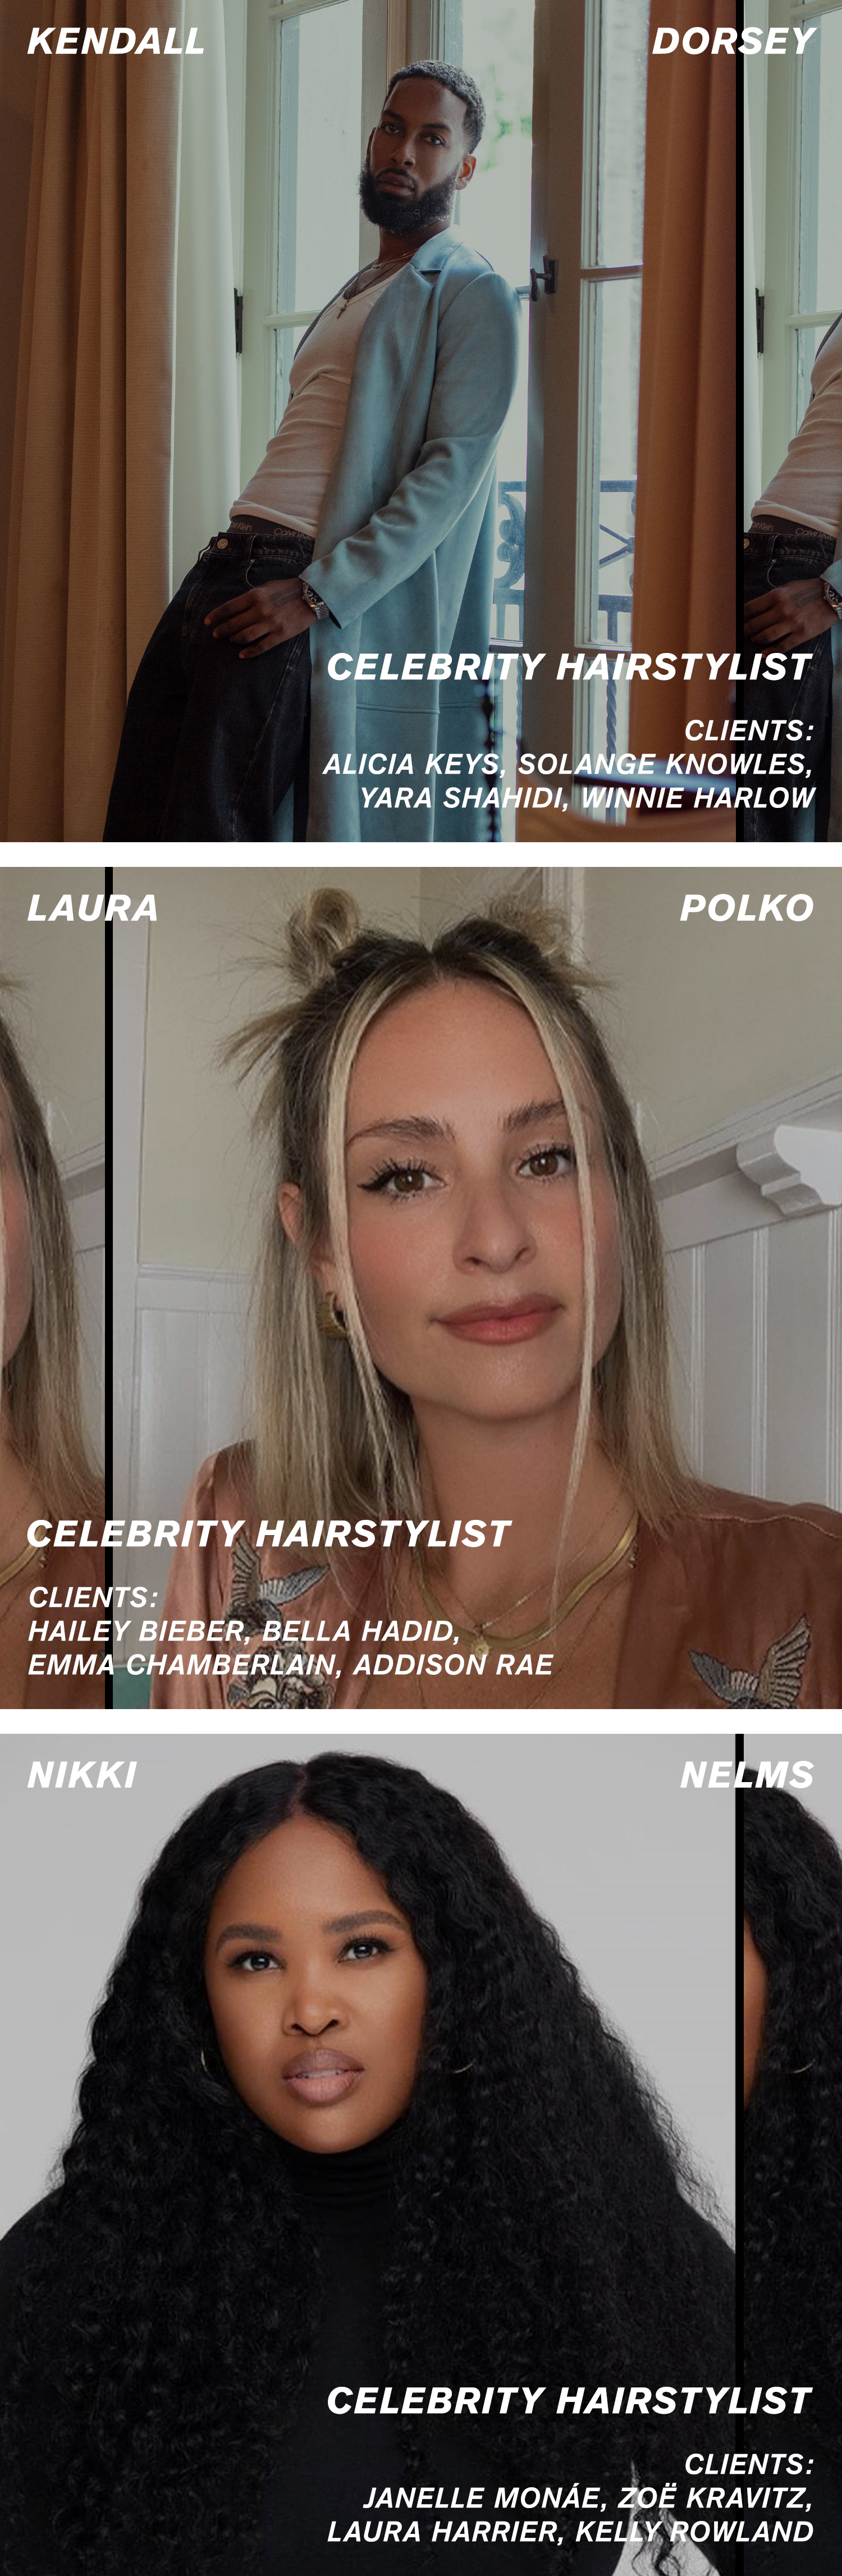 Celebrity Hairstylists Kendall Dorsey, Laura Polko, and Nikki Nelms